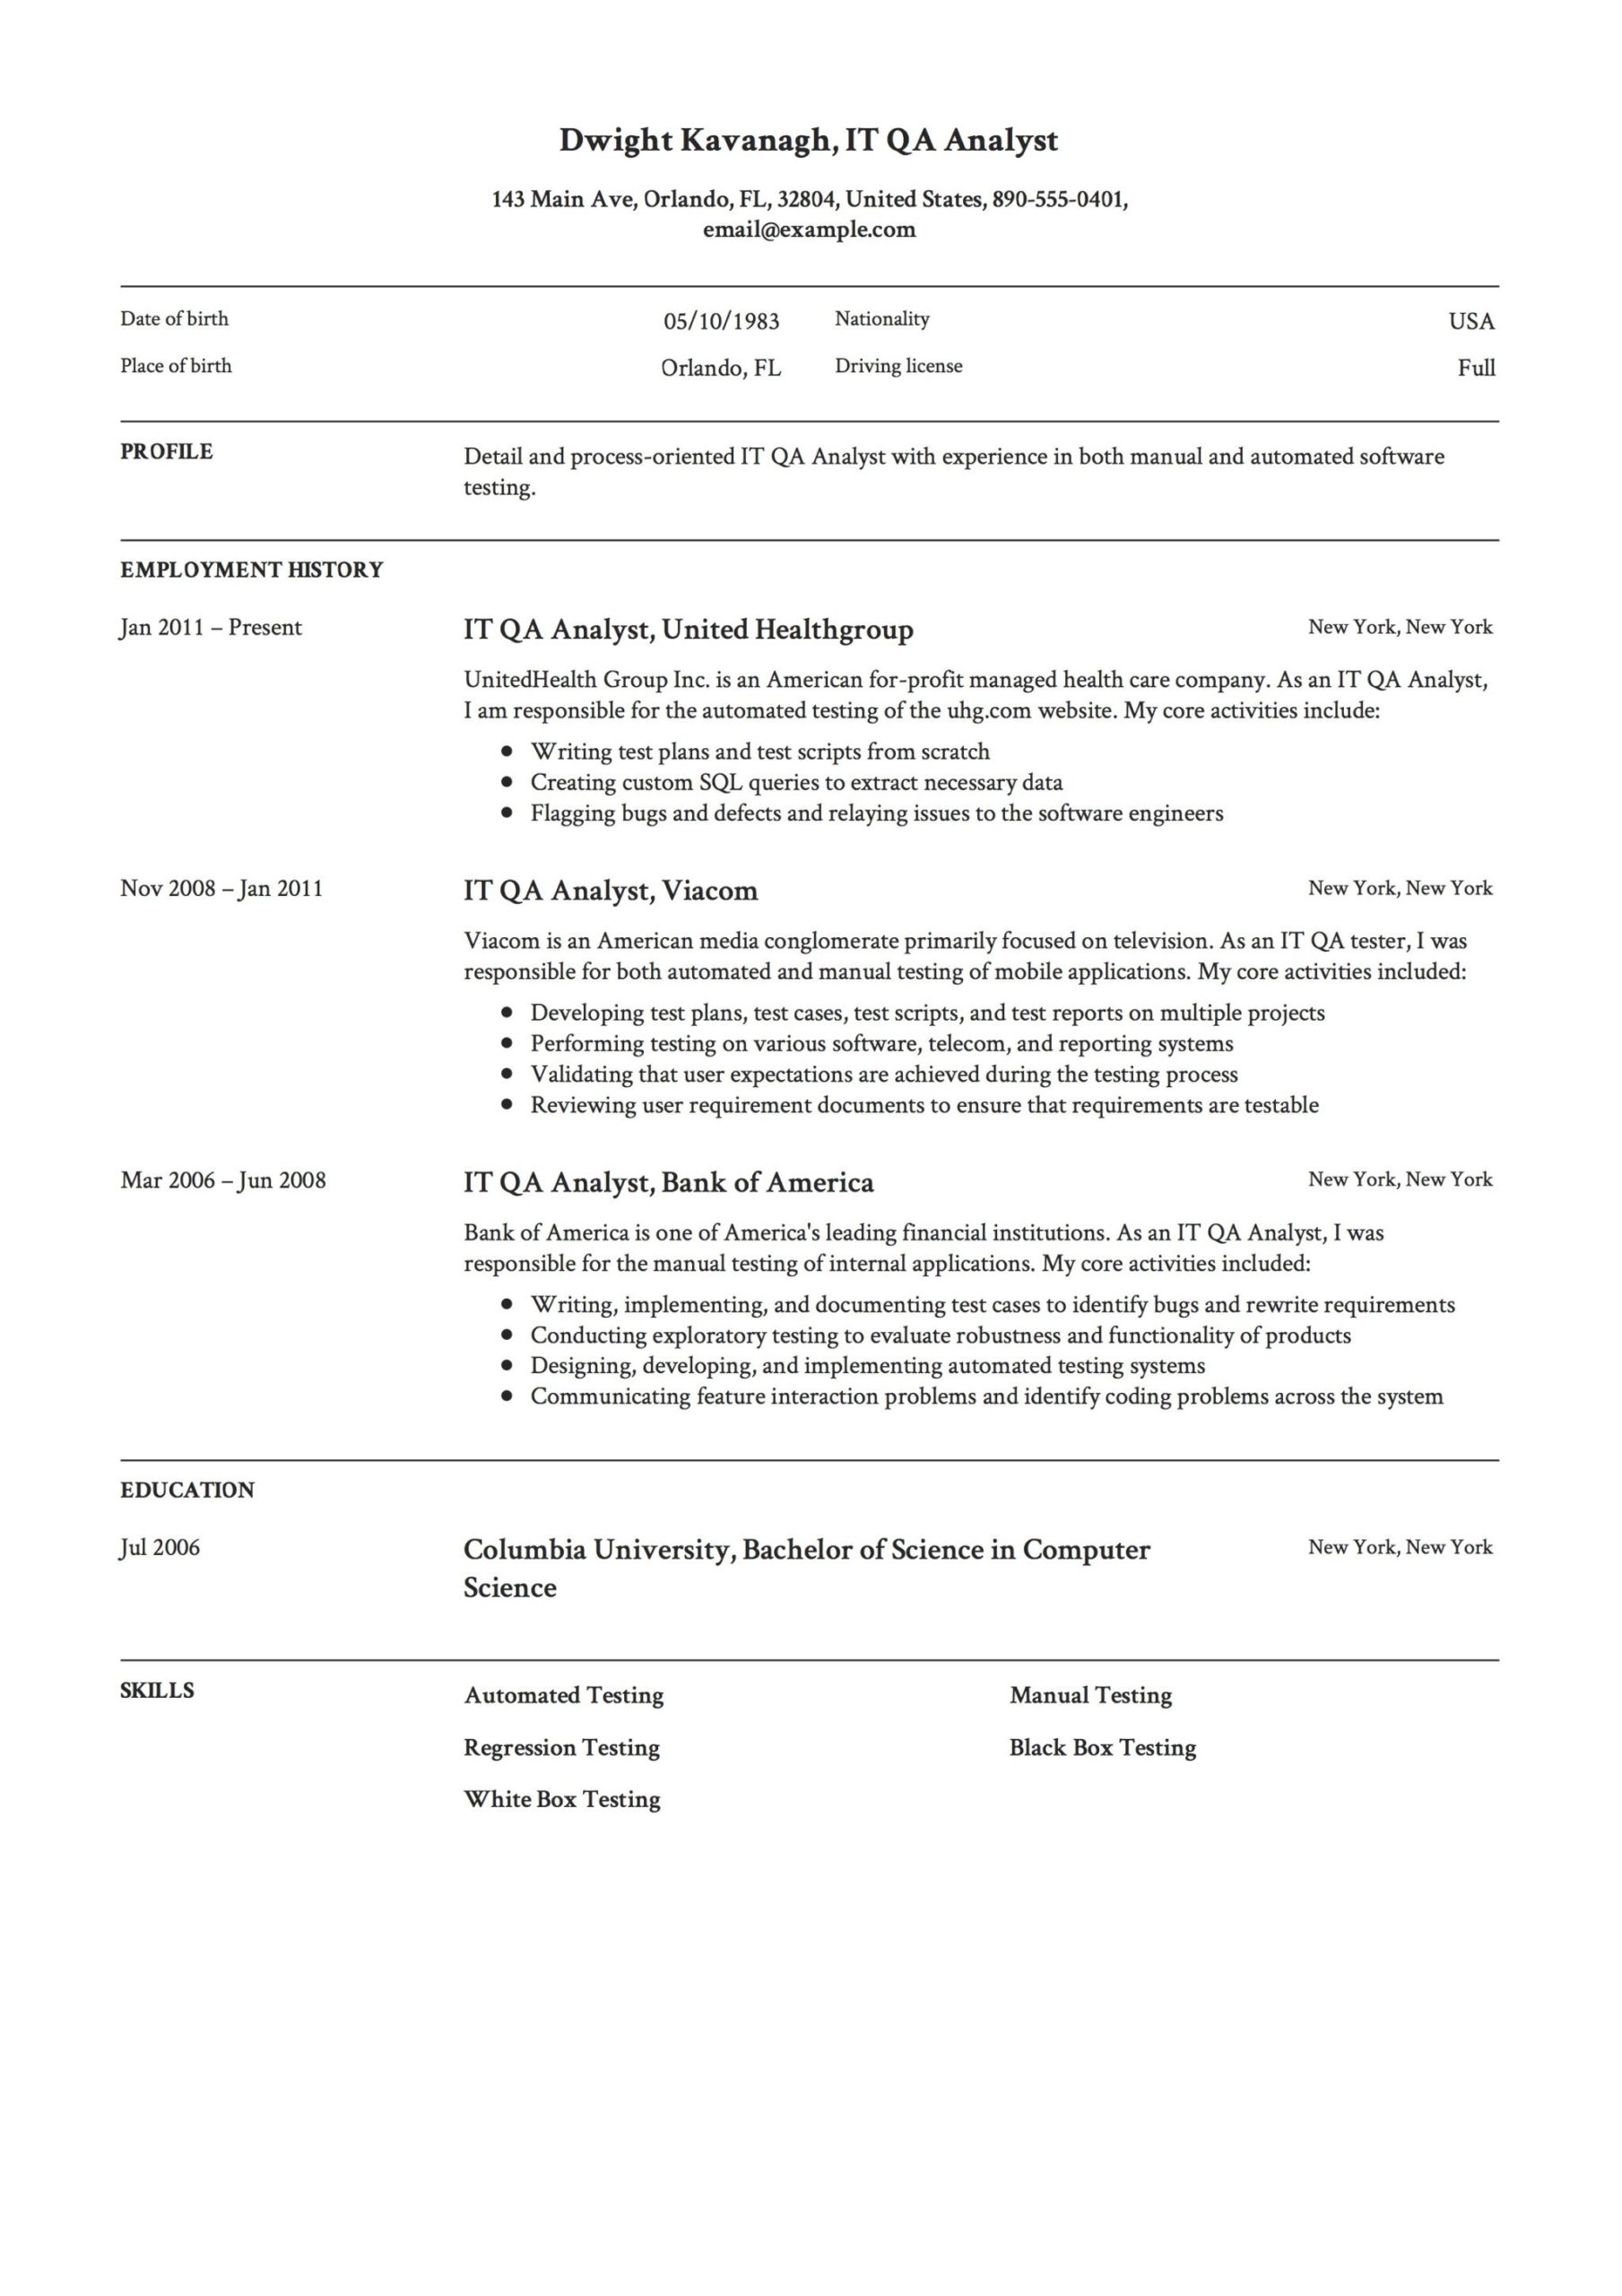 Sample Resume for Senior Qa Analyst It Qa Analyst Resume & Guide 14 Templates Free